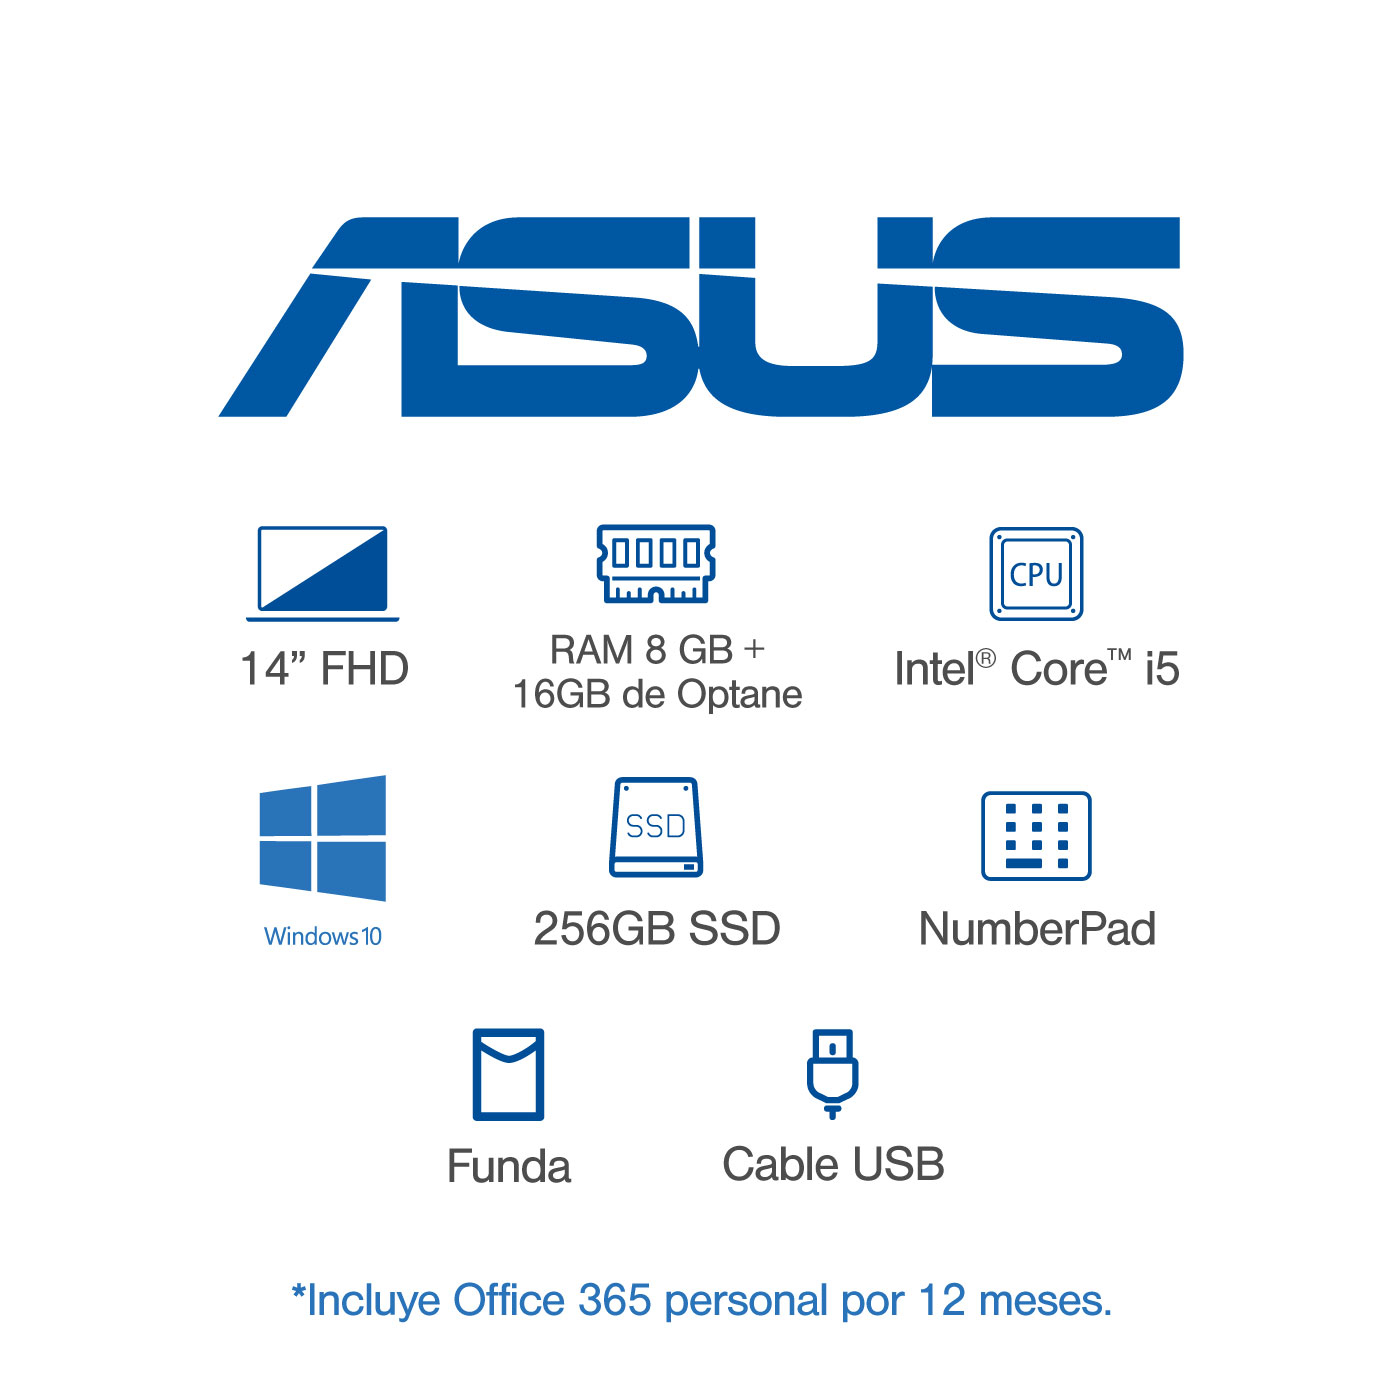 Computador Portátil ASUS Zenbook 14" Pulgadas UX433FAC-A5350TS Procesador Intel Core i5 RAM 8GB + 16GB Disco Estado Sólido 256GB - Plateado